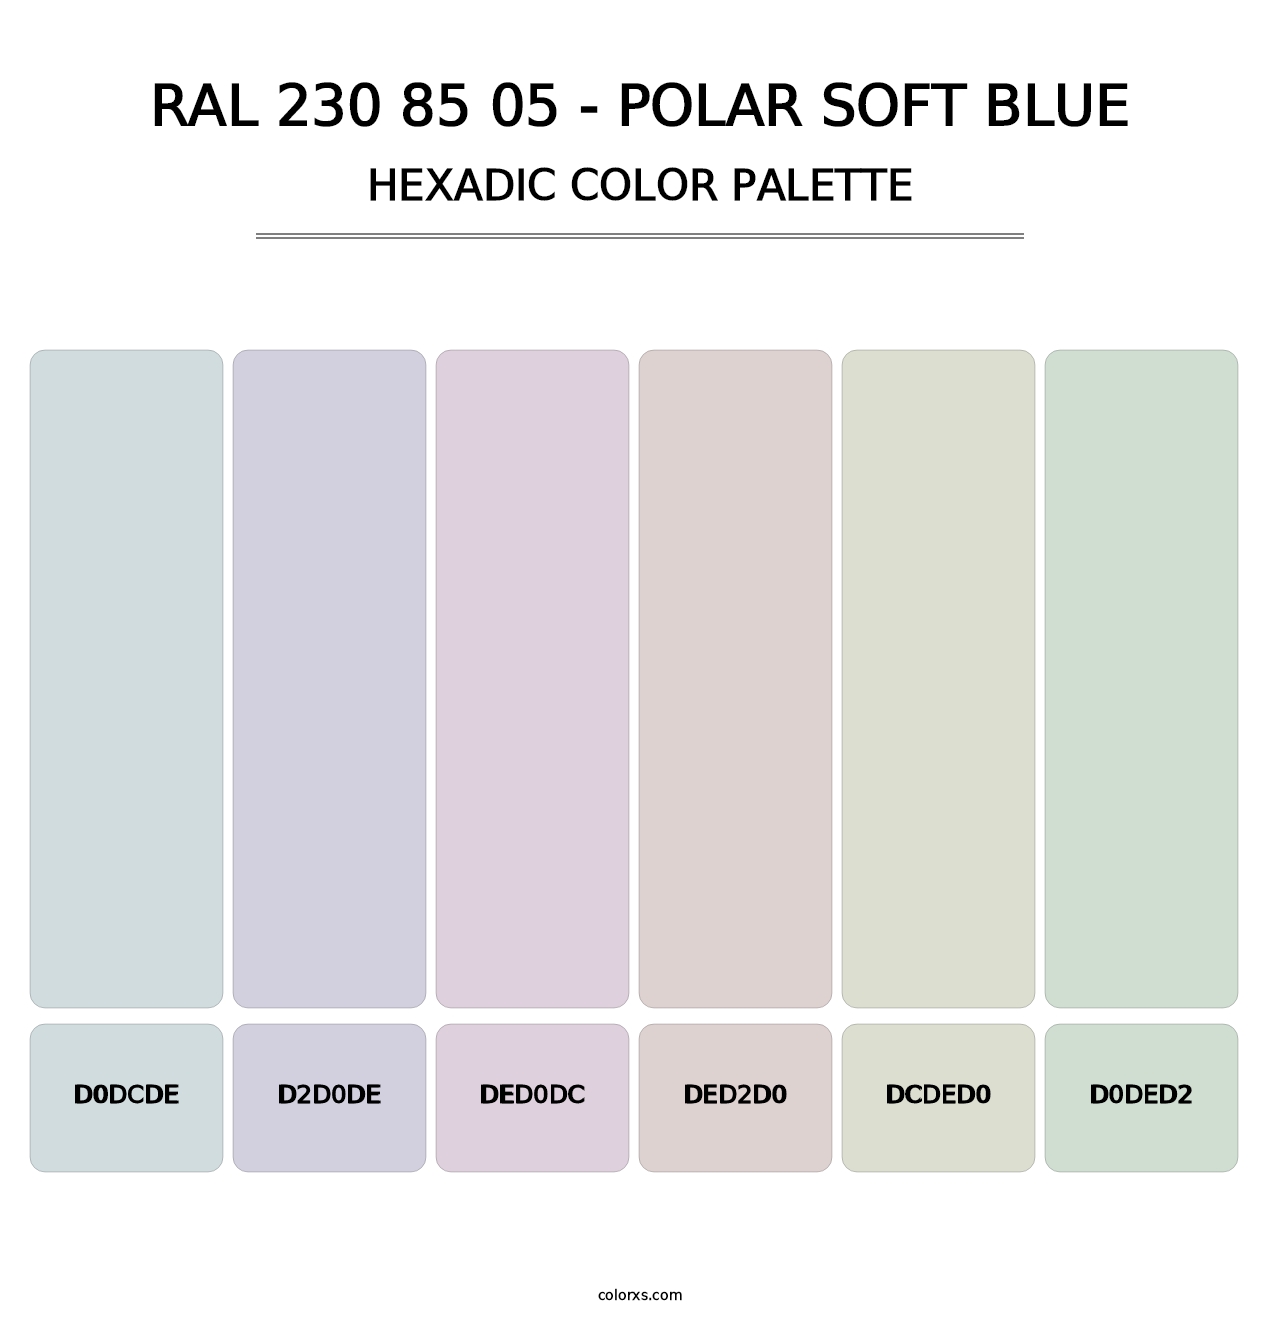 RAL 230 85 05 - Polar Soft Blue - Hexadic Color Palette